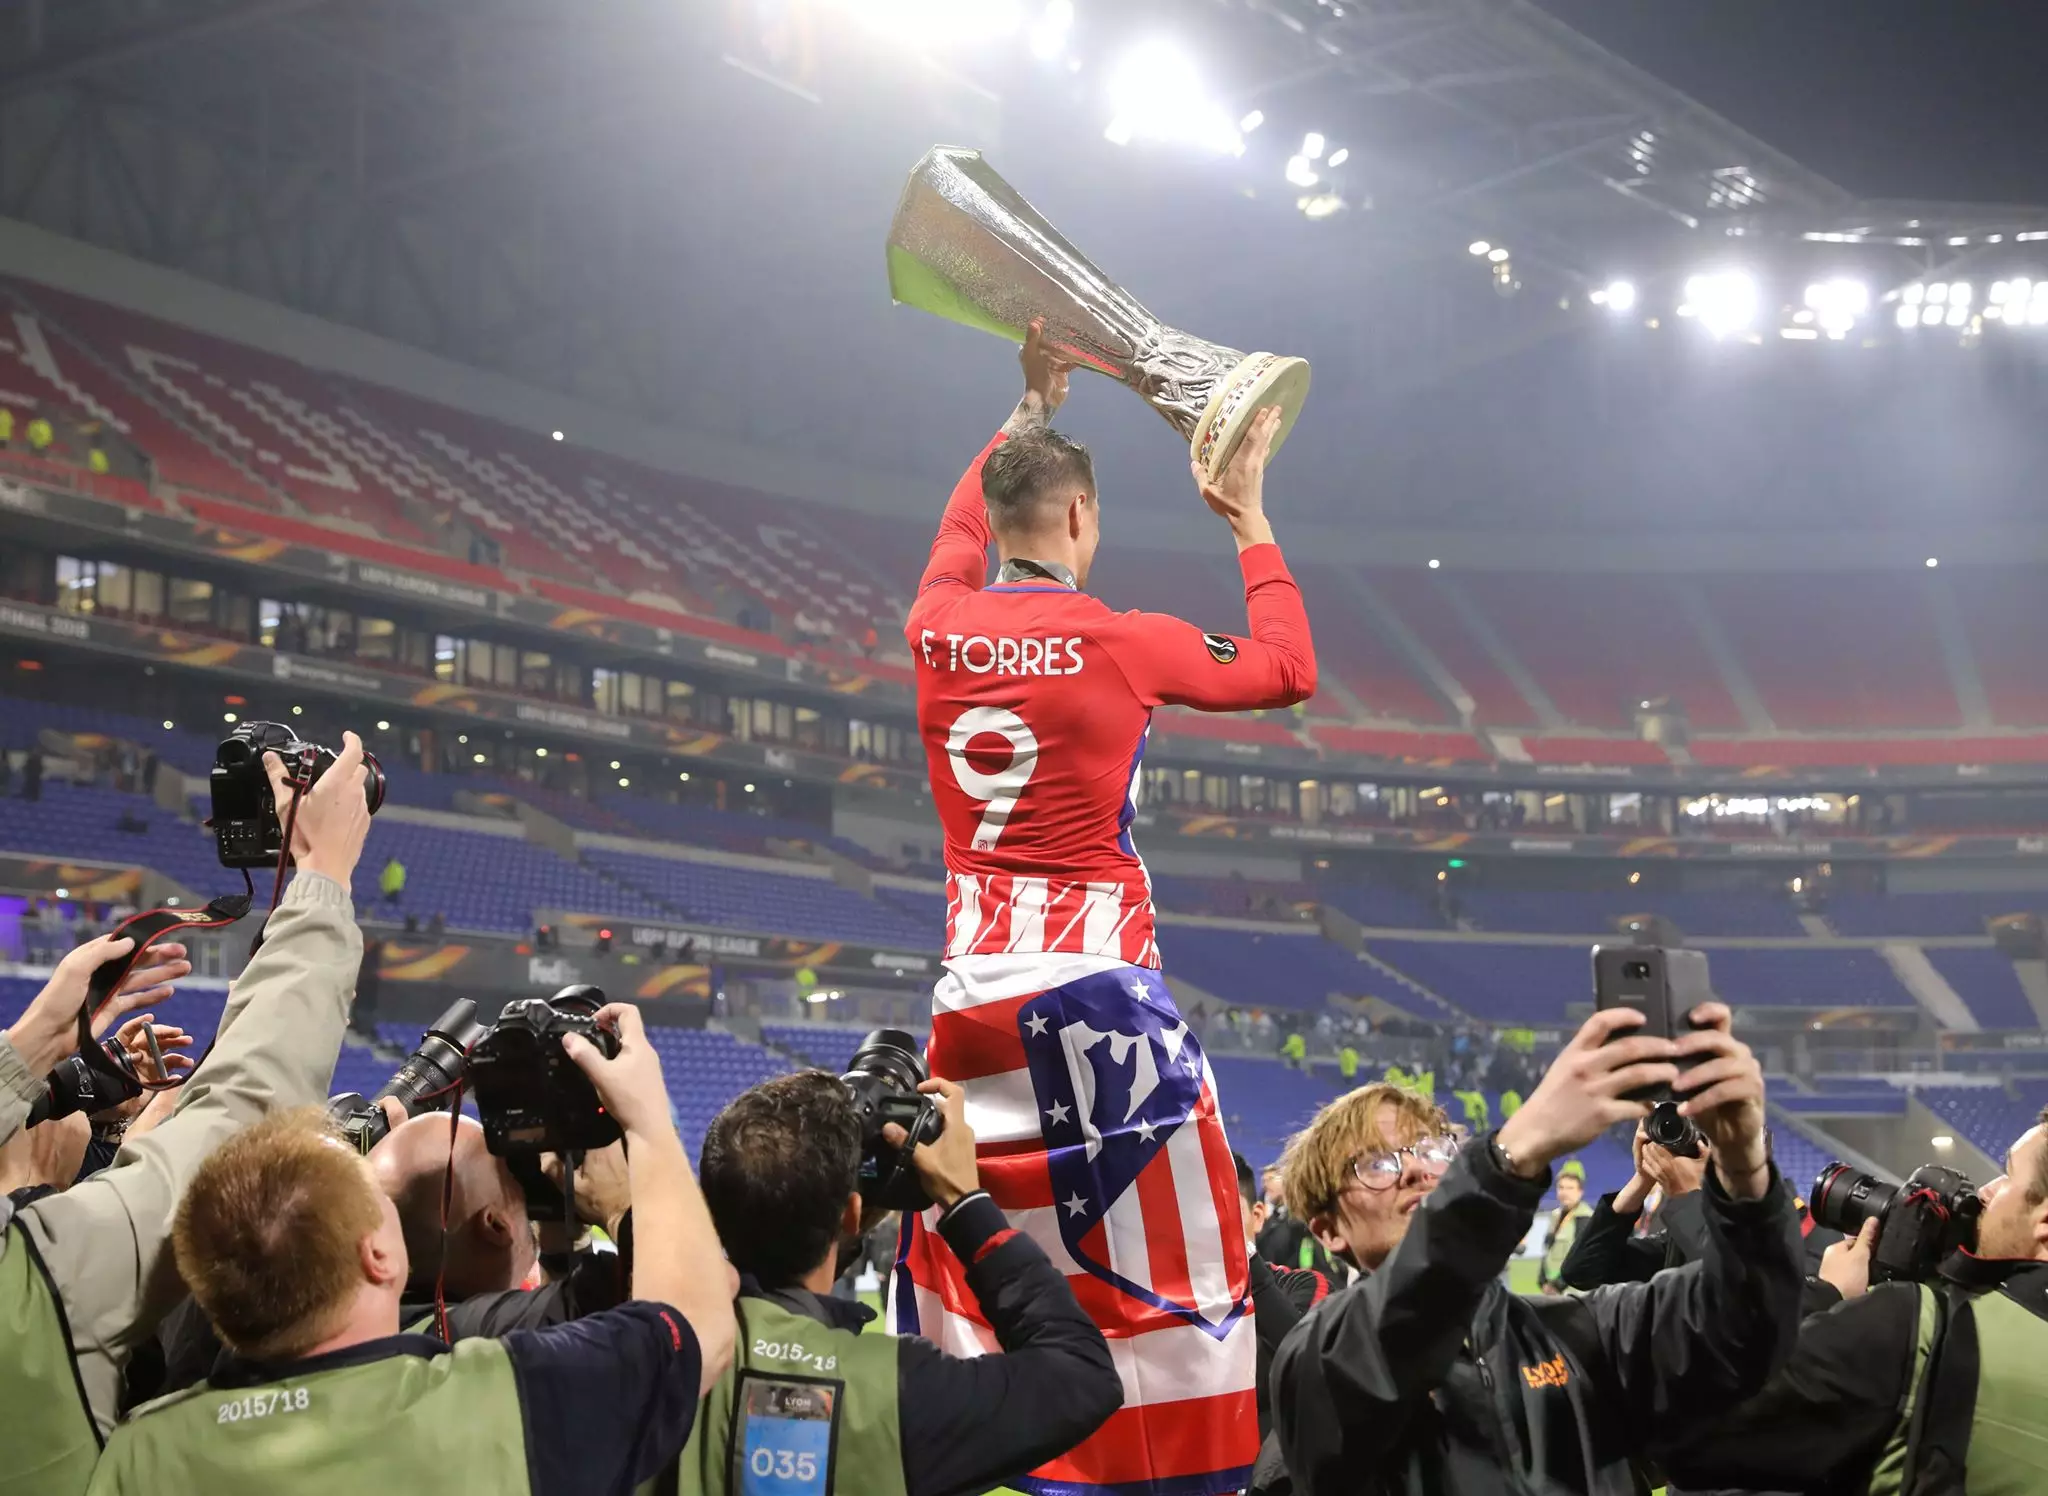 Torres raises silverware. Image: PA